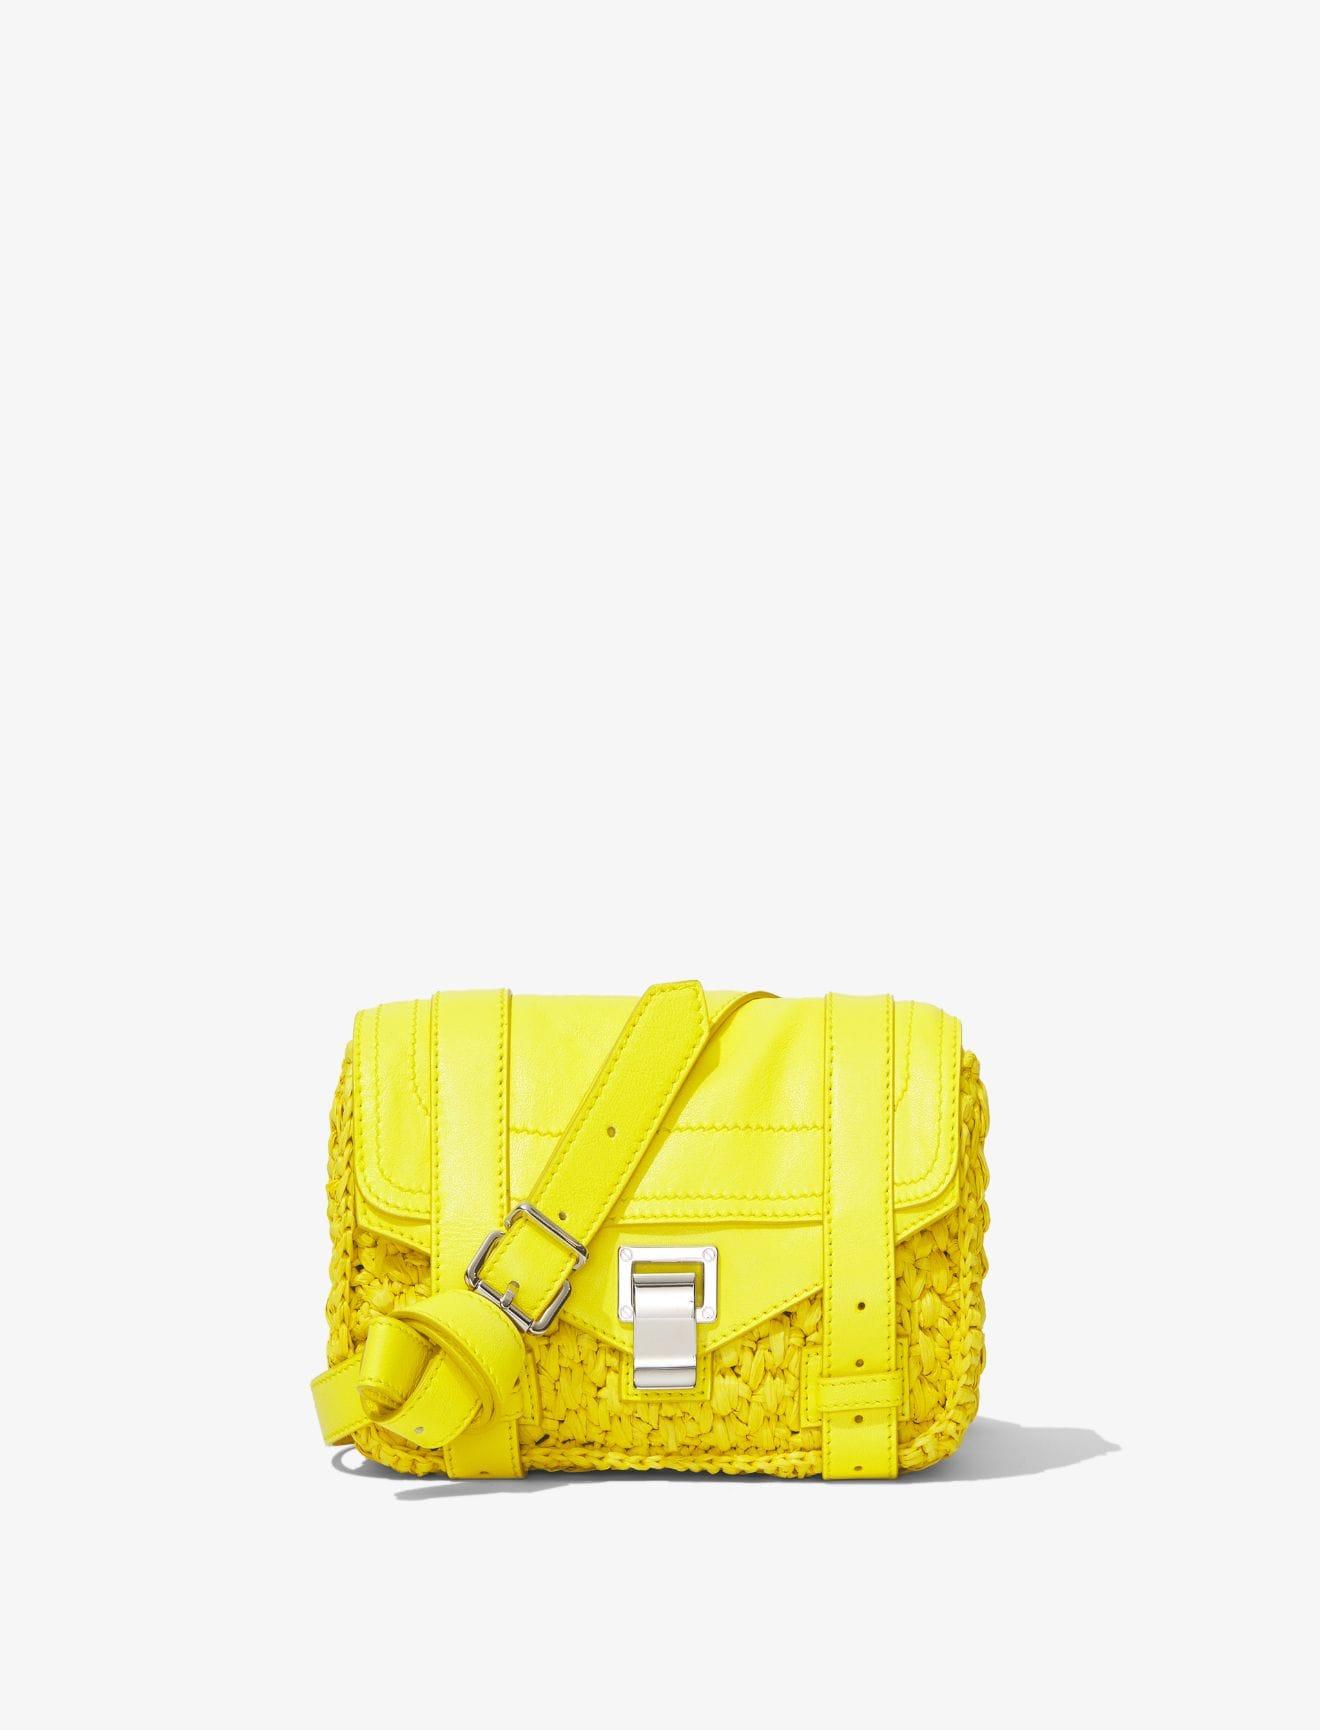 Proenza Schouler Raffia Ps1 Mini Crossbody Bag in Yellow | Lyst